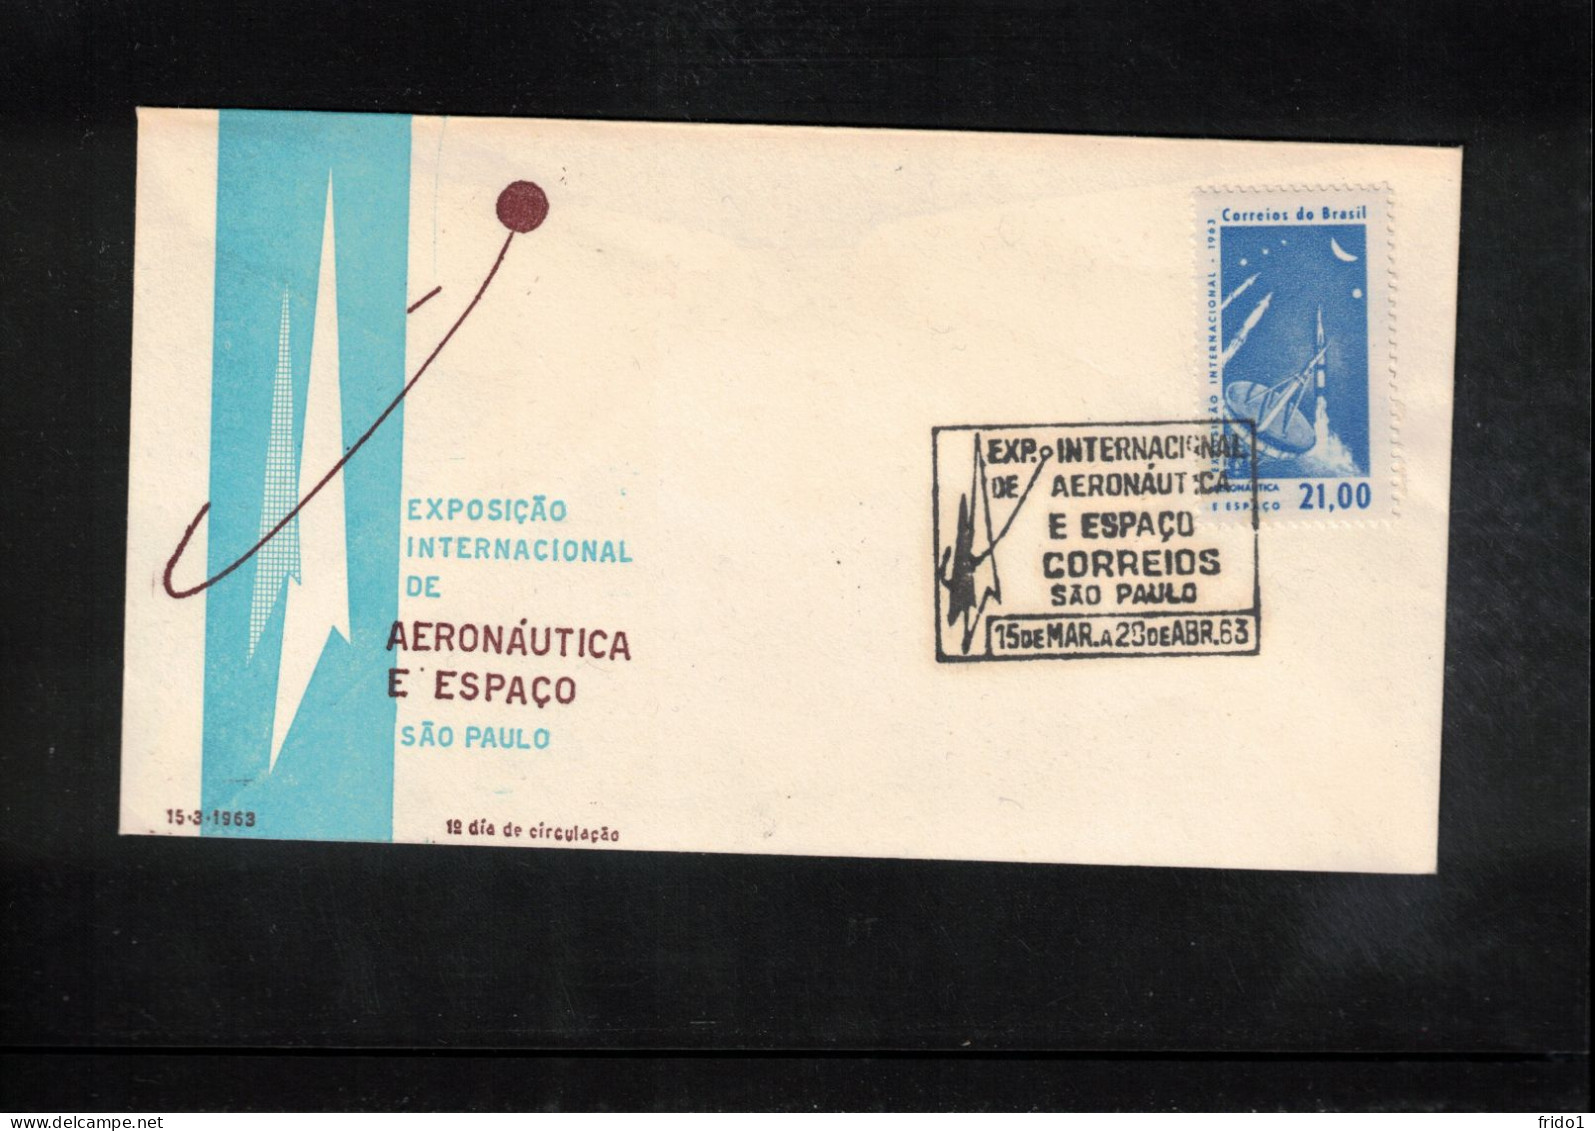 Brasil 1963 Space / Weltraum International Aeronautical Exhibition + Space Interesting Cover FDC - Südamerika